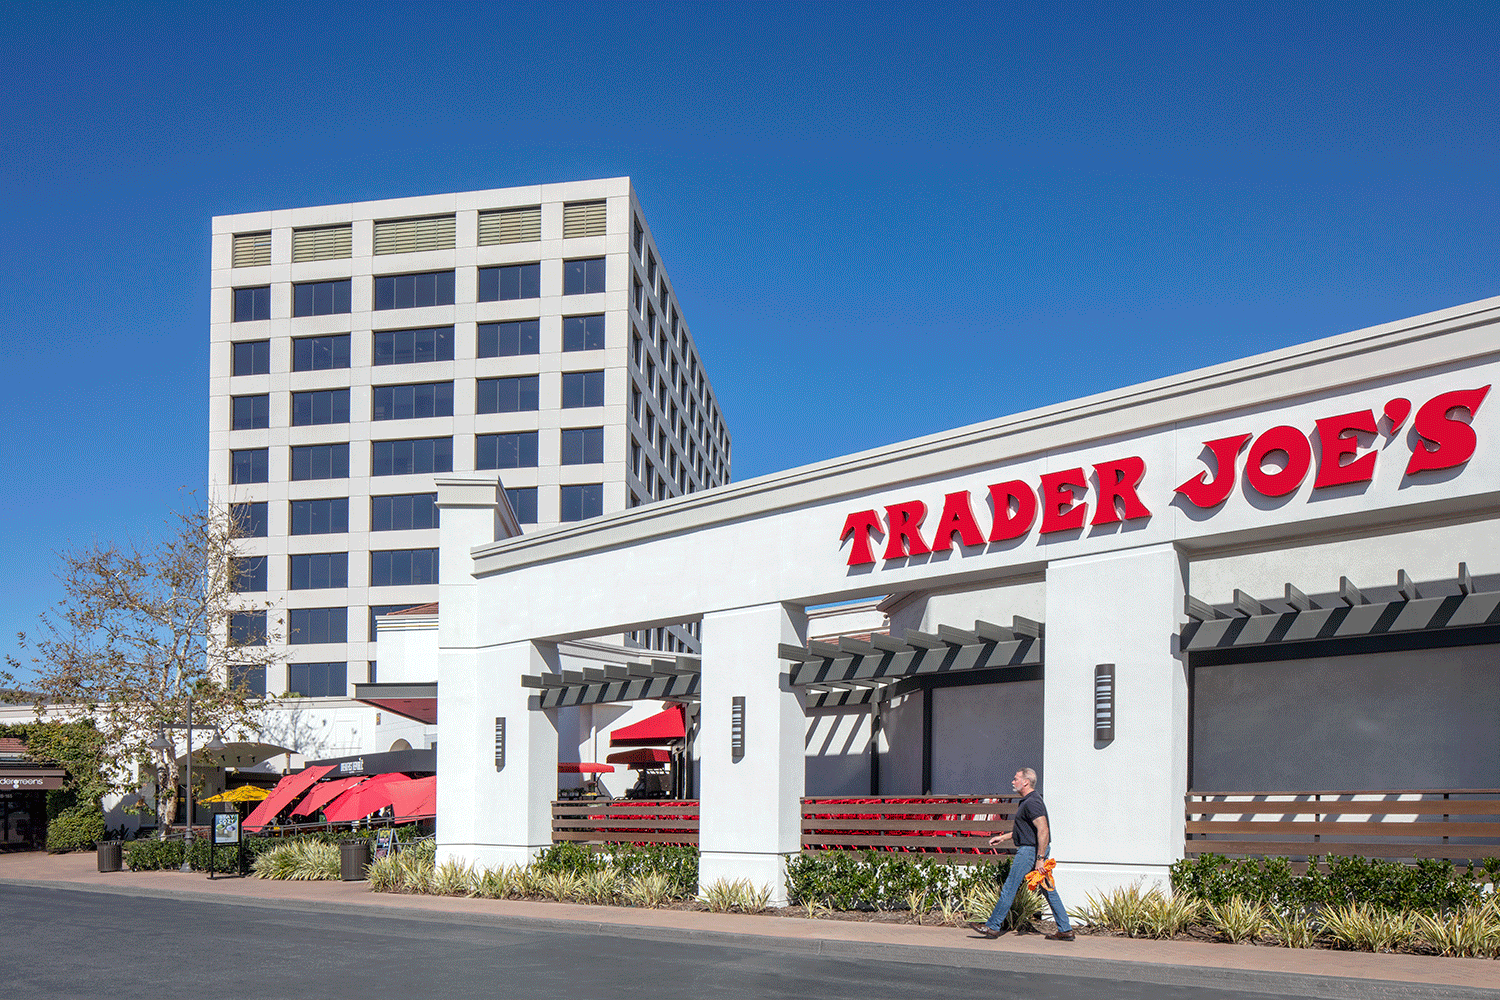  Exterior view of Trader Joe's at University Center